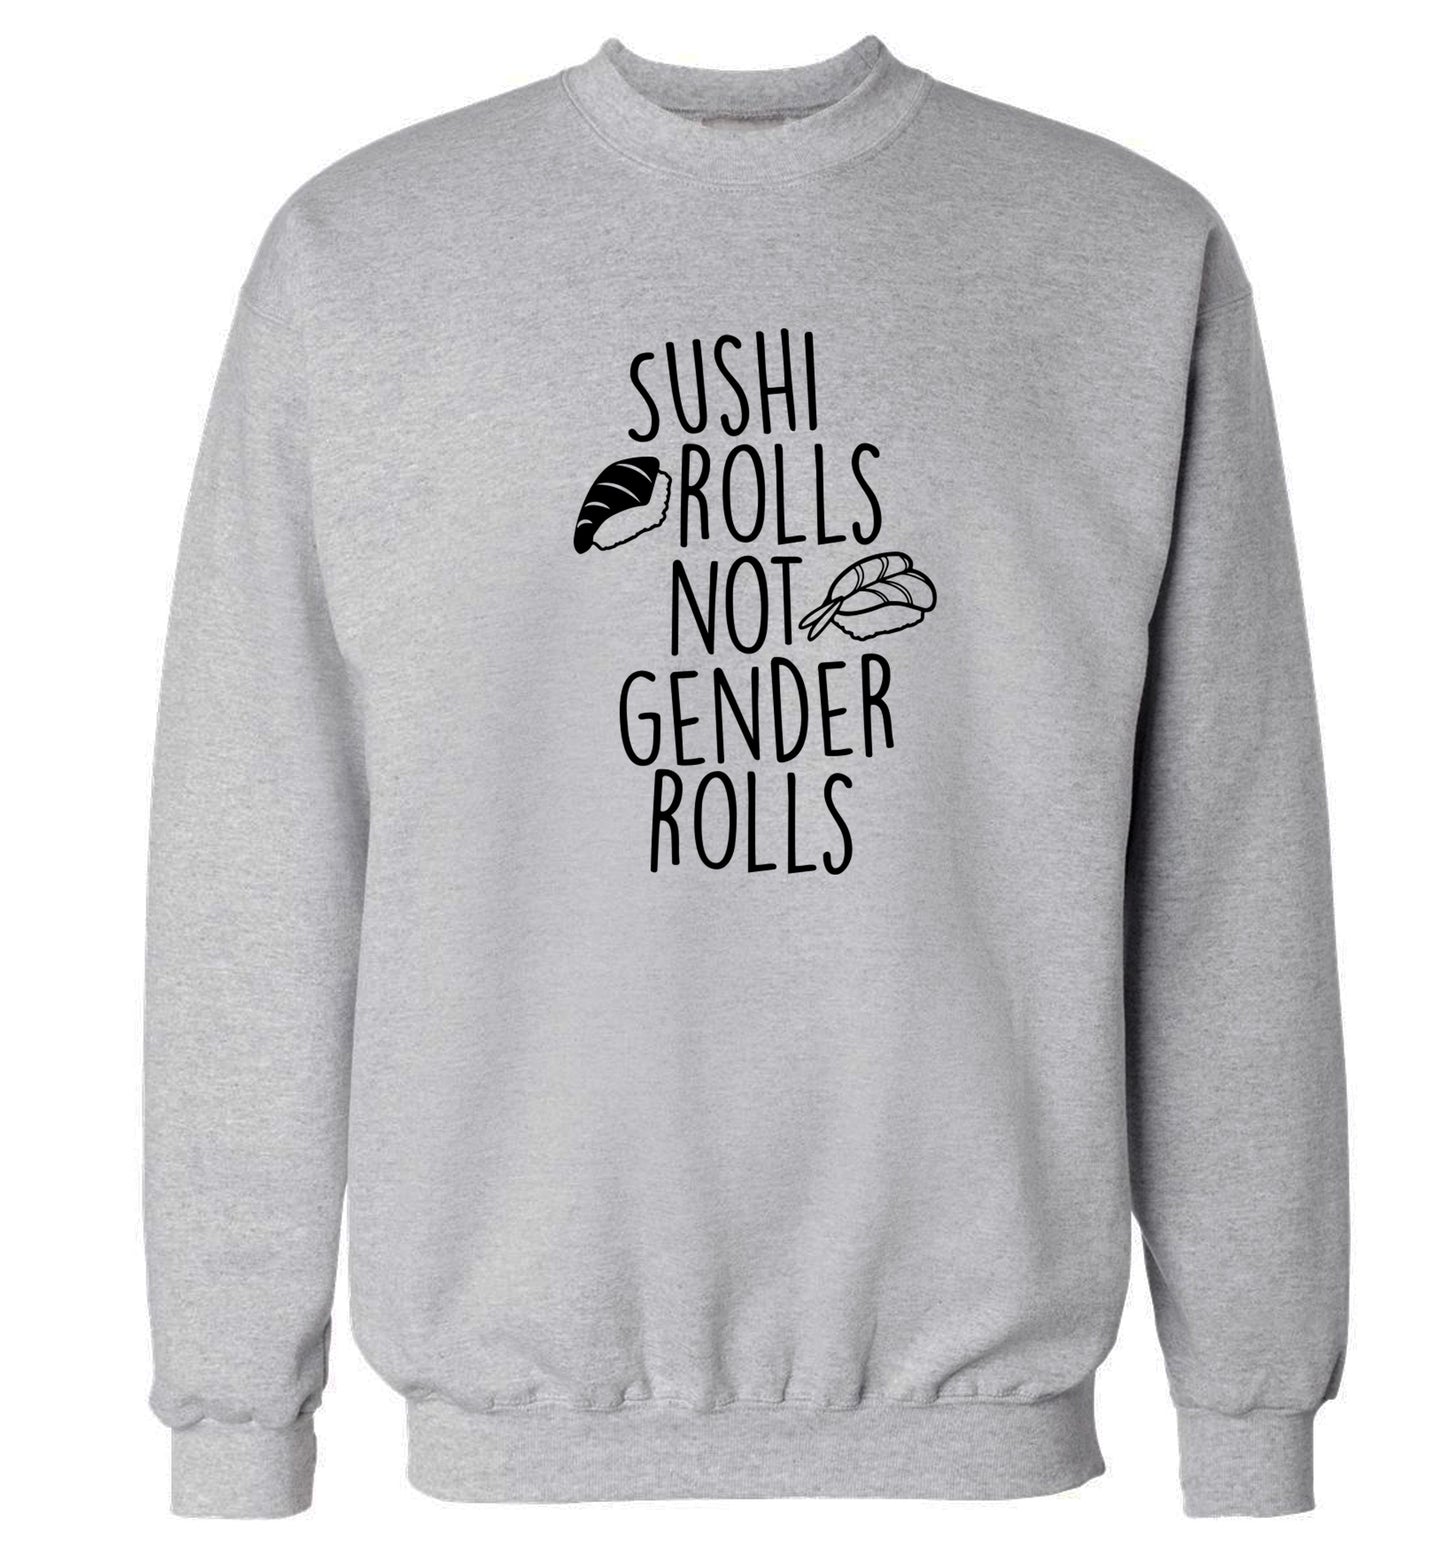 Sushi rolls not gender rolls Adult's unisex grey Sweater 2XL